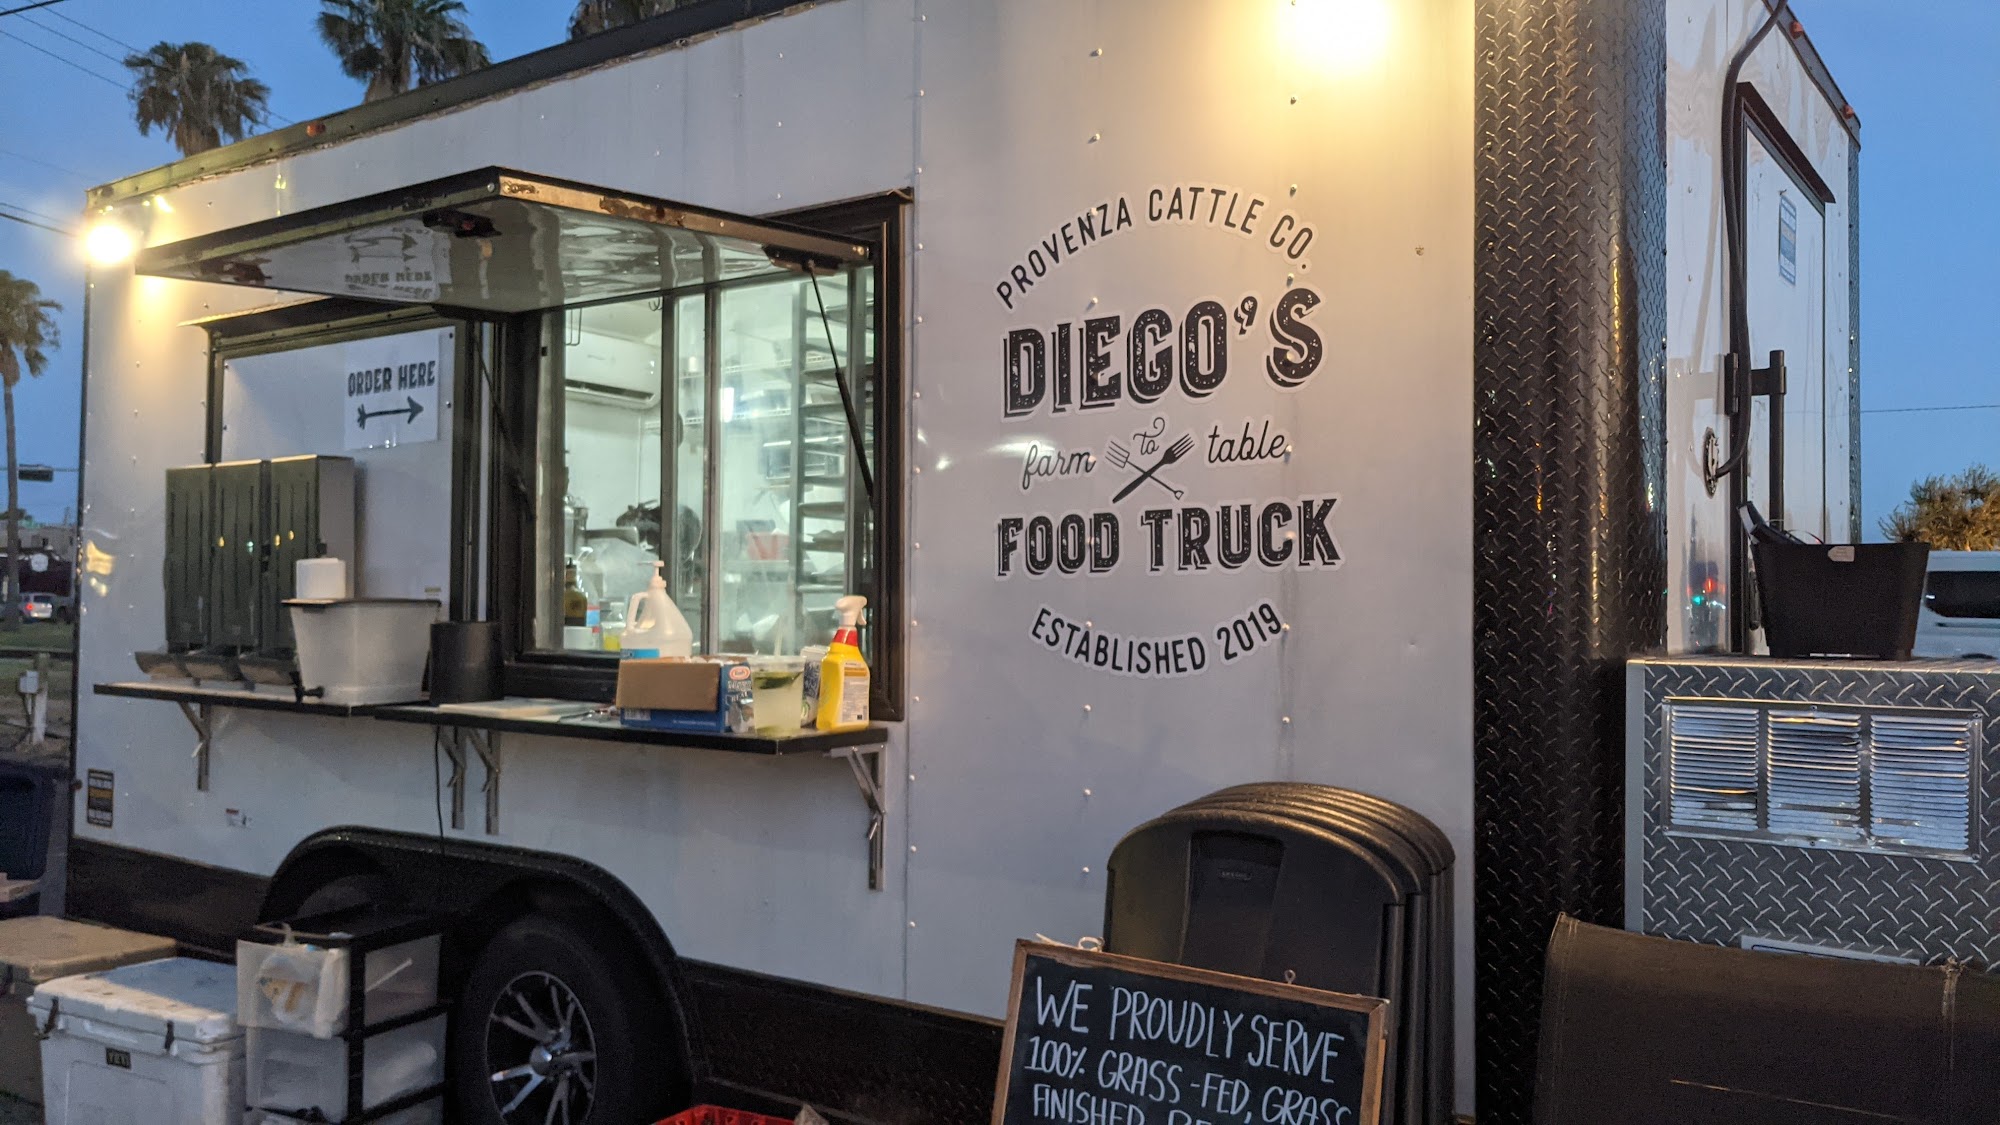 Diego’s Food Truck